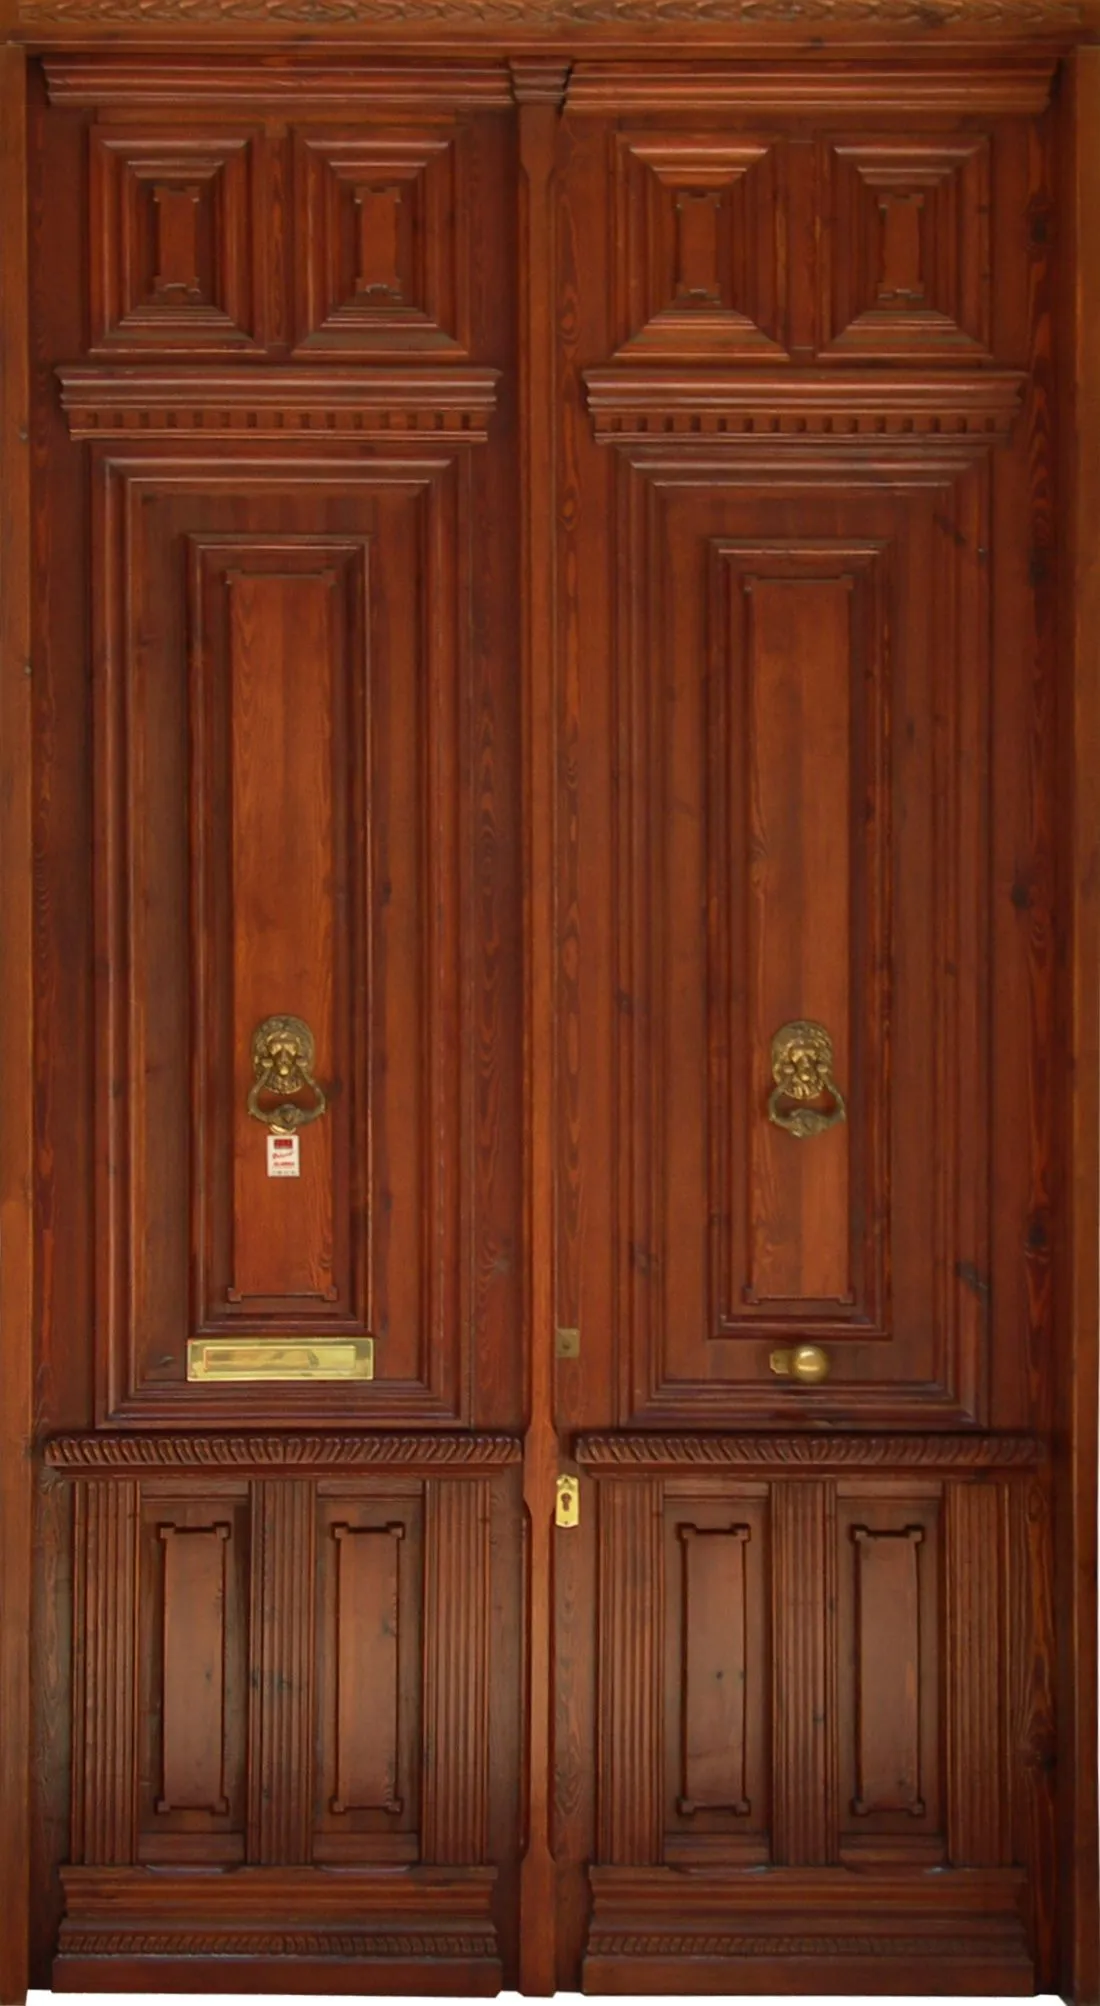 Pin Spaindoors Puertas De Madera on Pinterest